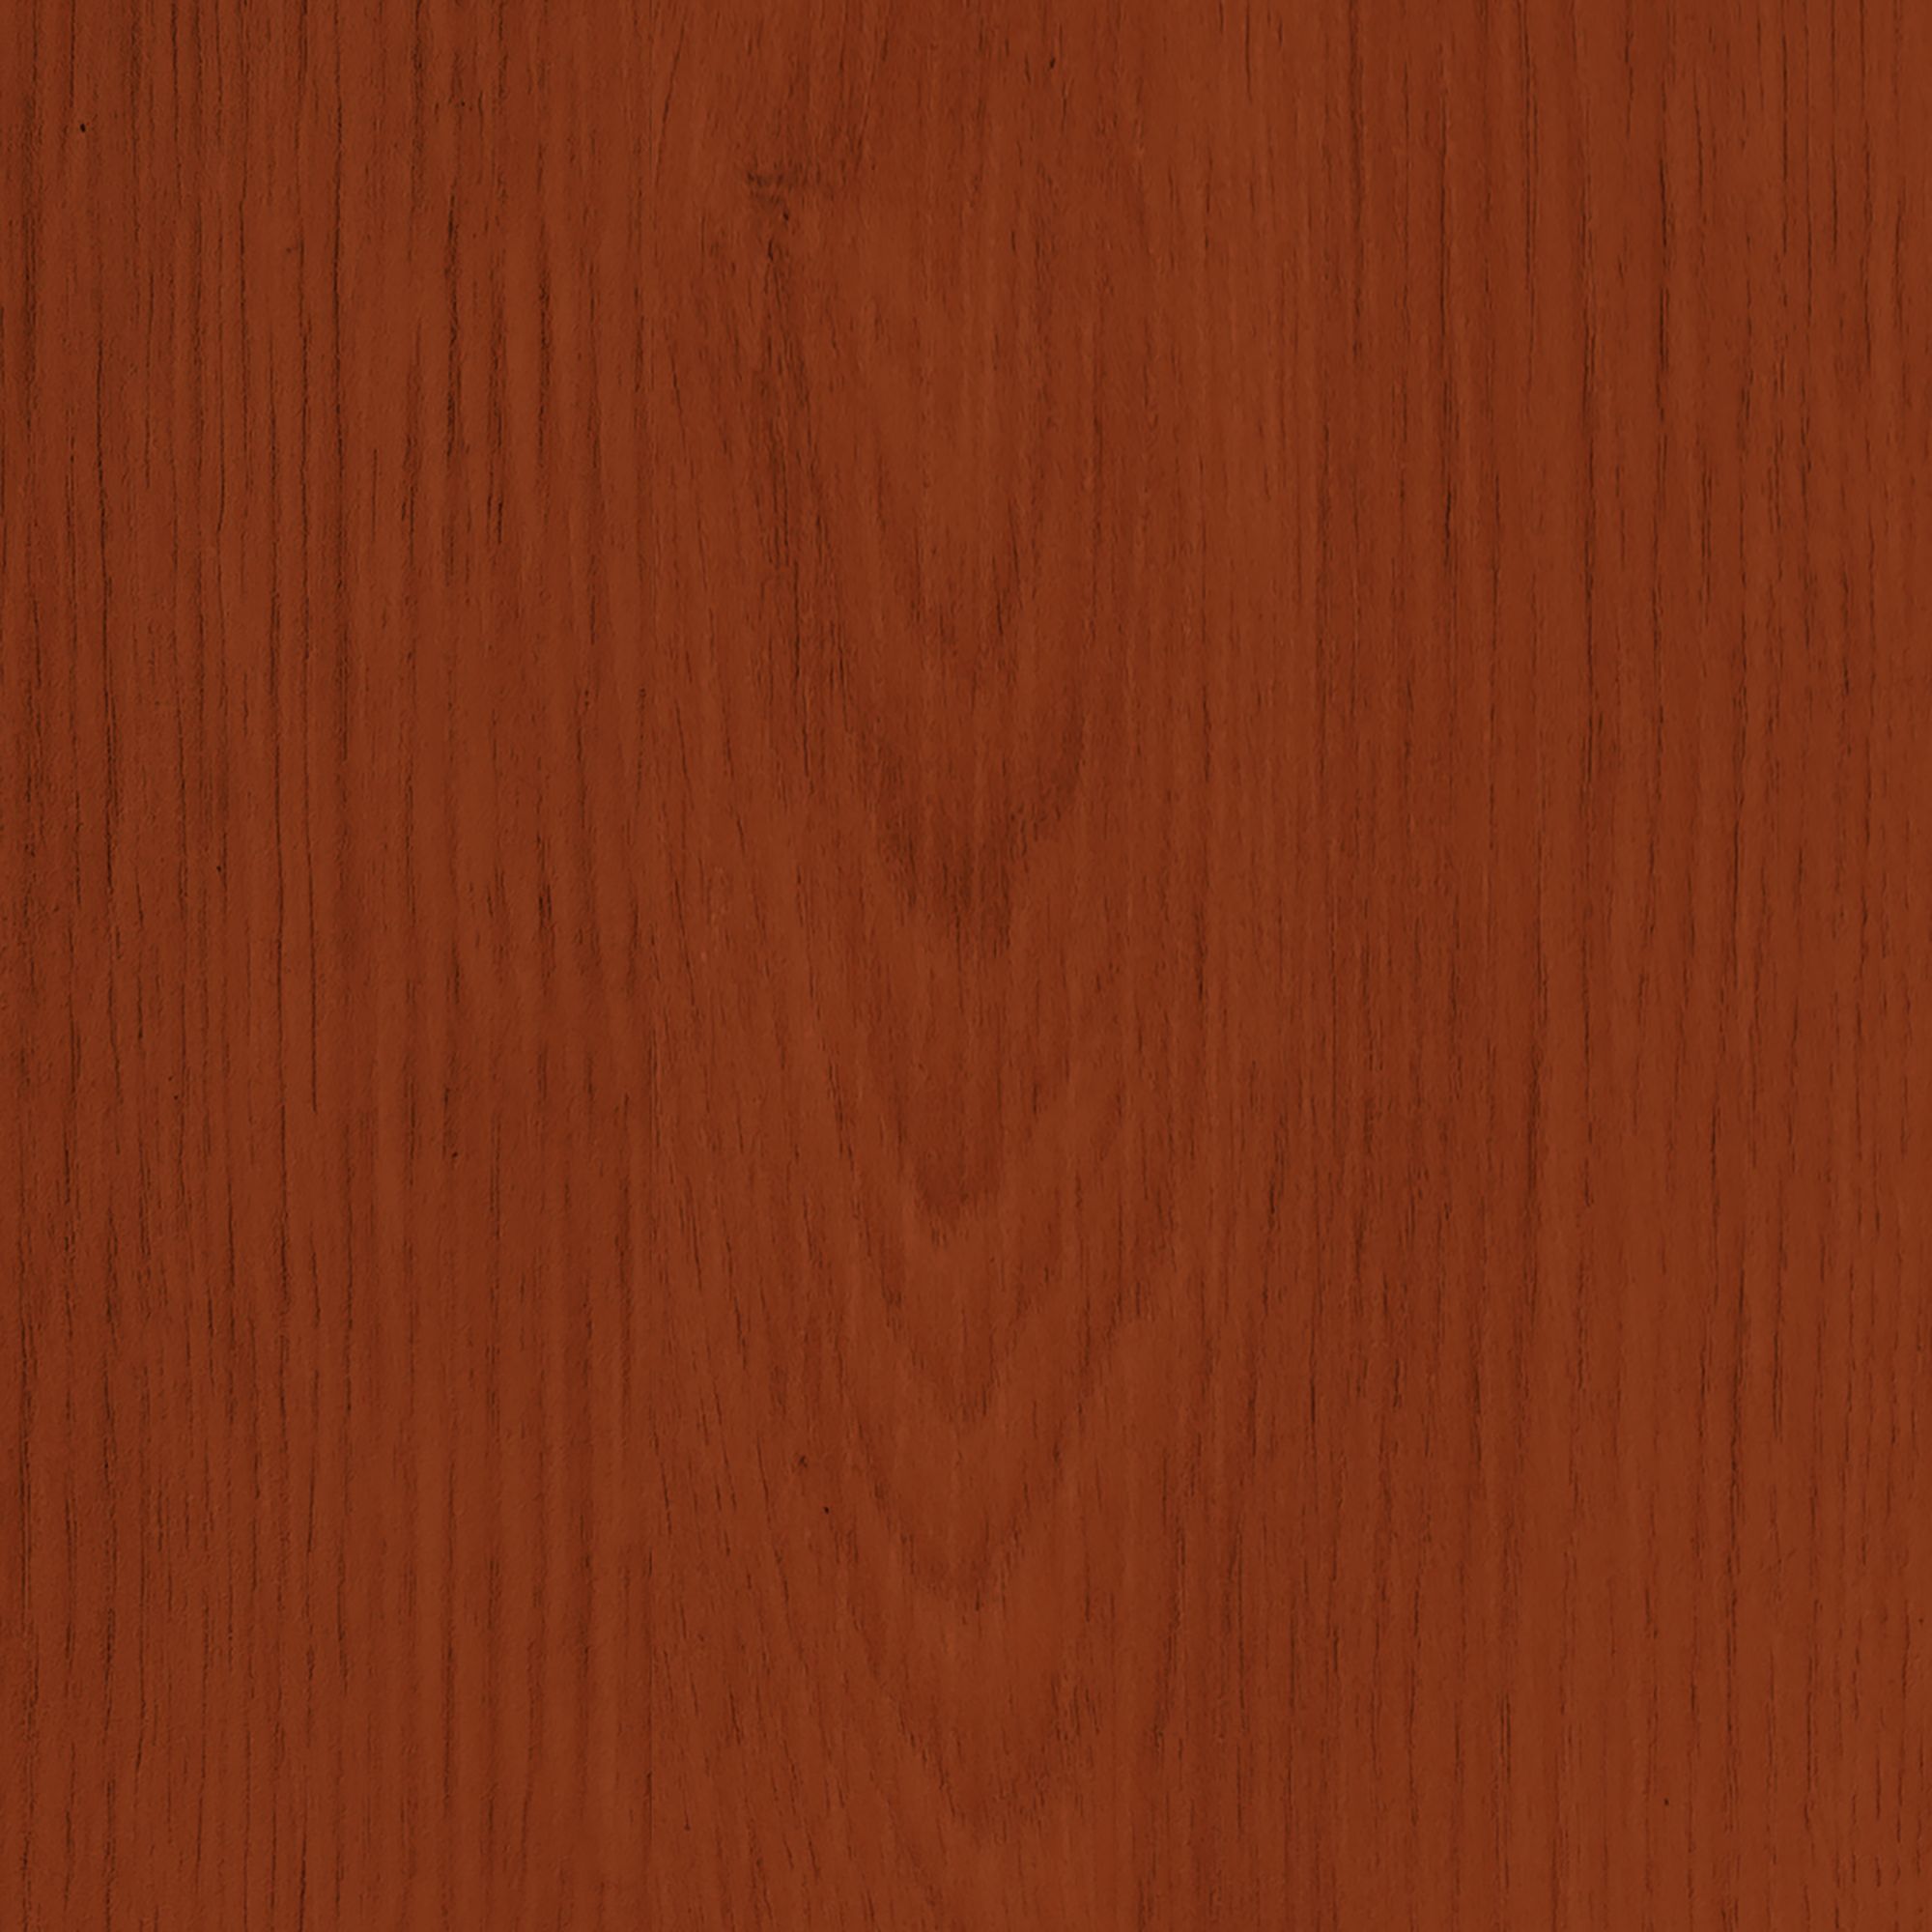 GoodHome Mahogany Gloss Multi-surface Furniture Wood varnish, 750ml